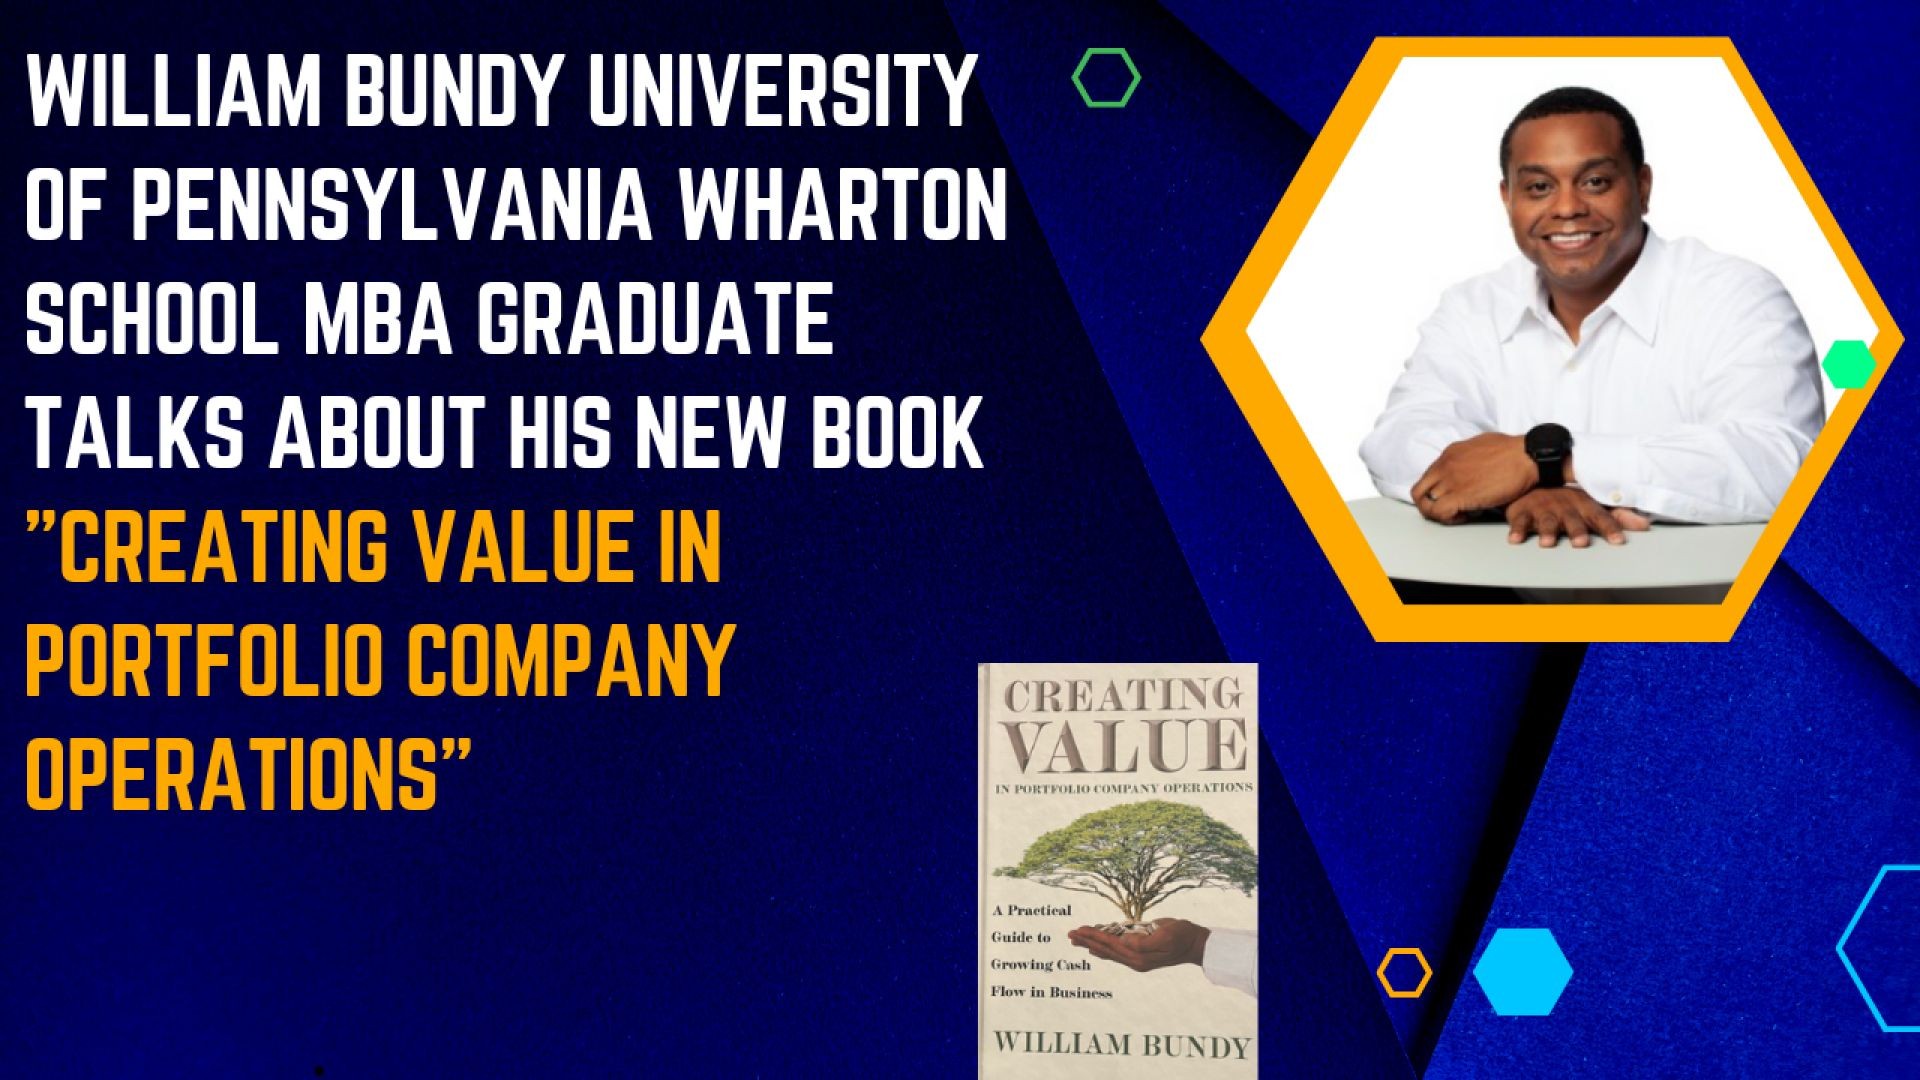 Wharton School MBA Graduate William Bundy Shows His New Private Equity Book